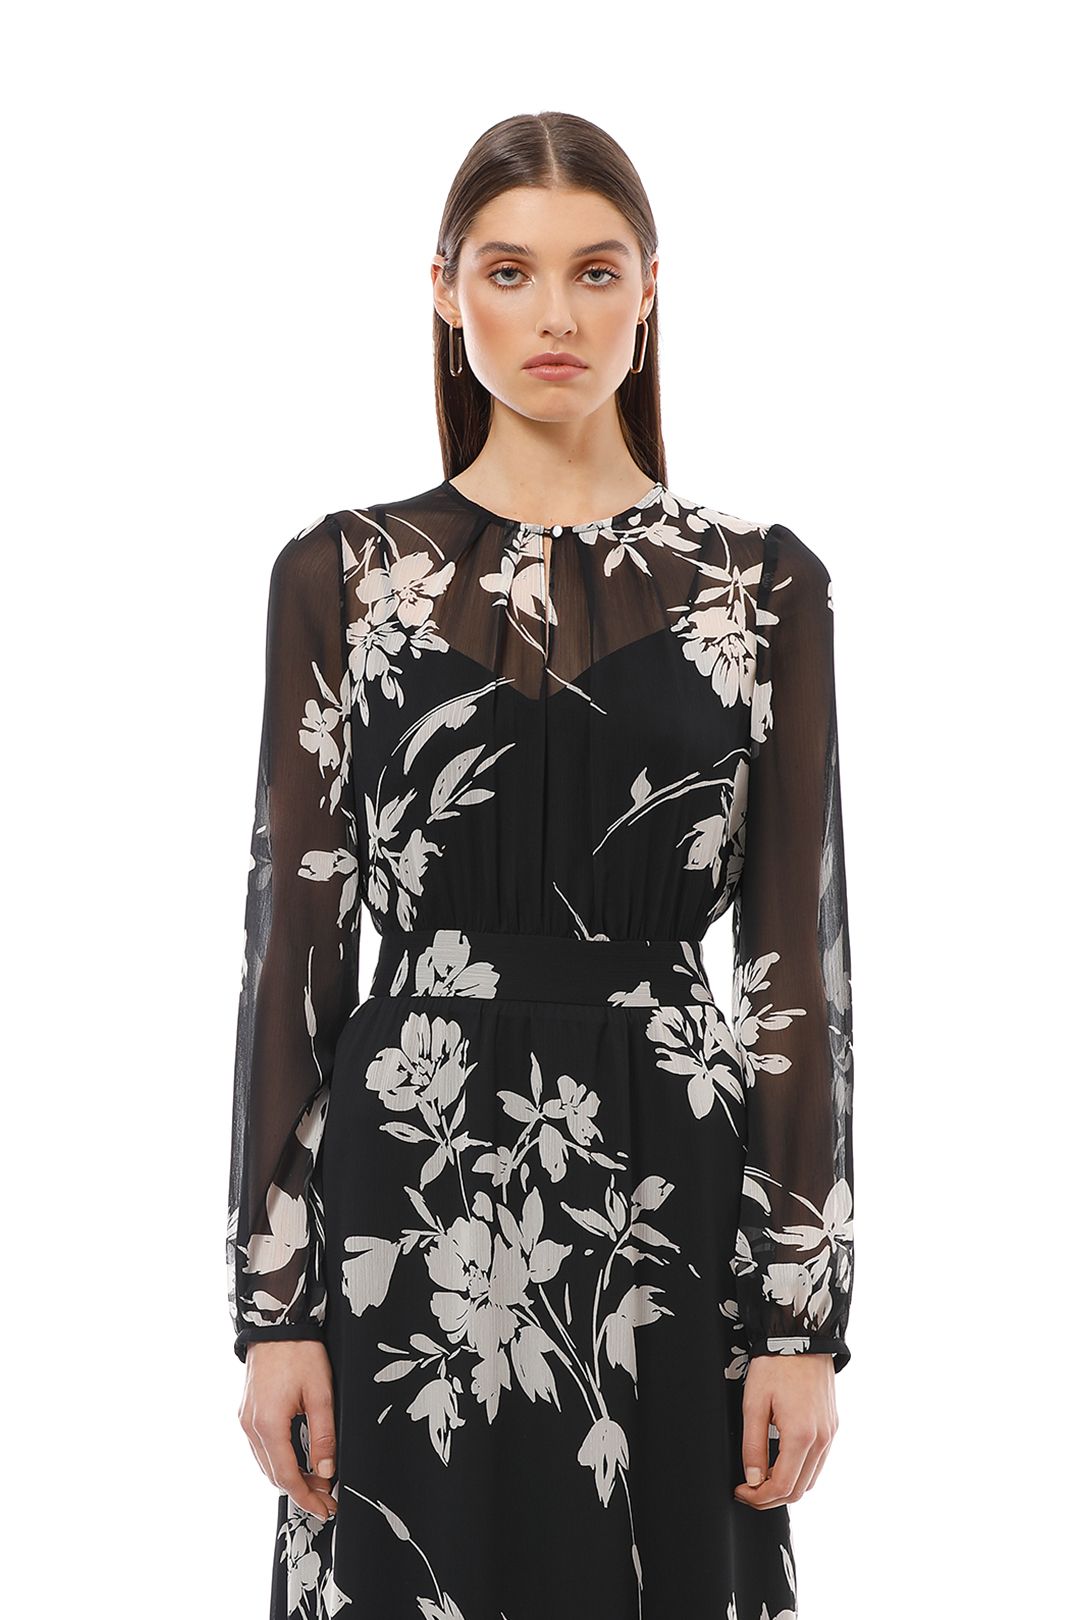 Cue - Monochrome Floral Midi Dress - Black - Close Up